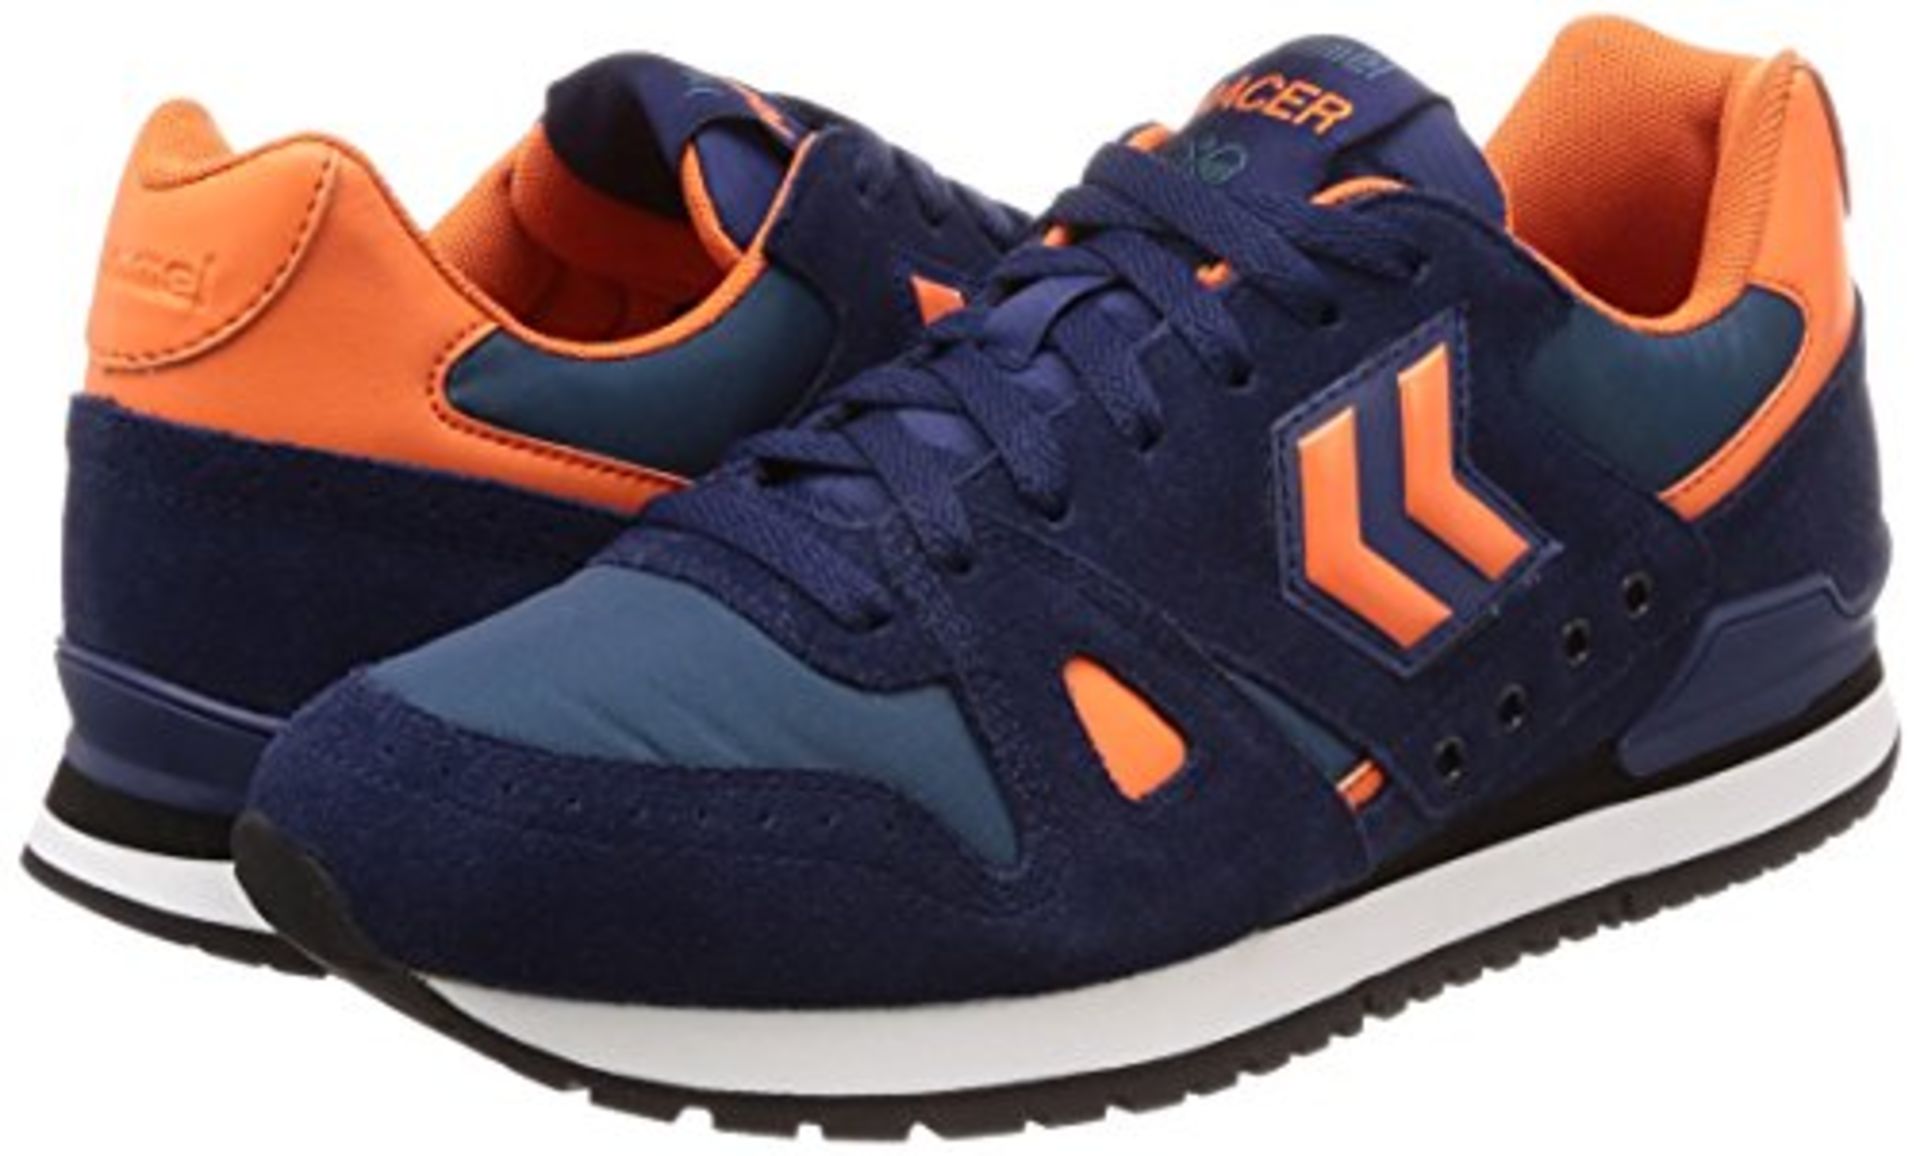 1 x hummel Marathona Trainers Shoes Dark Blue, HM201999, Peacoat, 42 Size: 42 EU | EAN: 57004948785 - Image 5 of 7